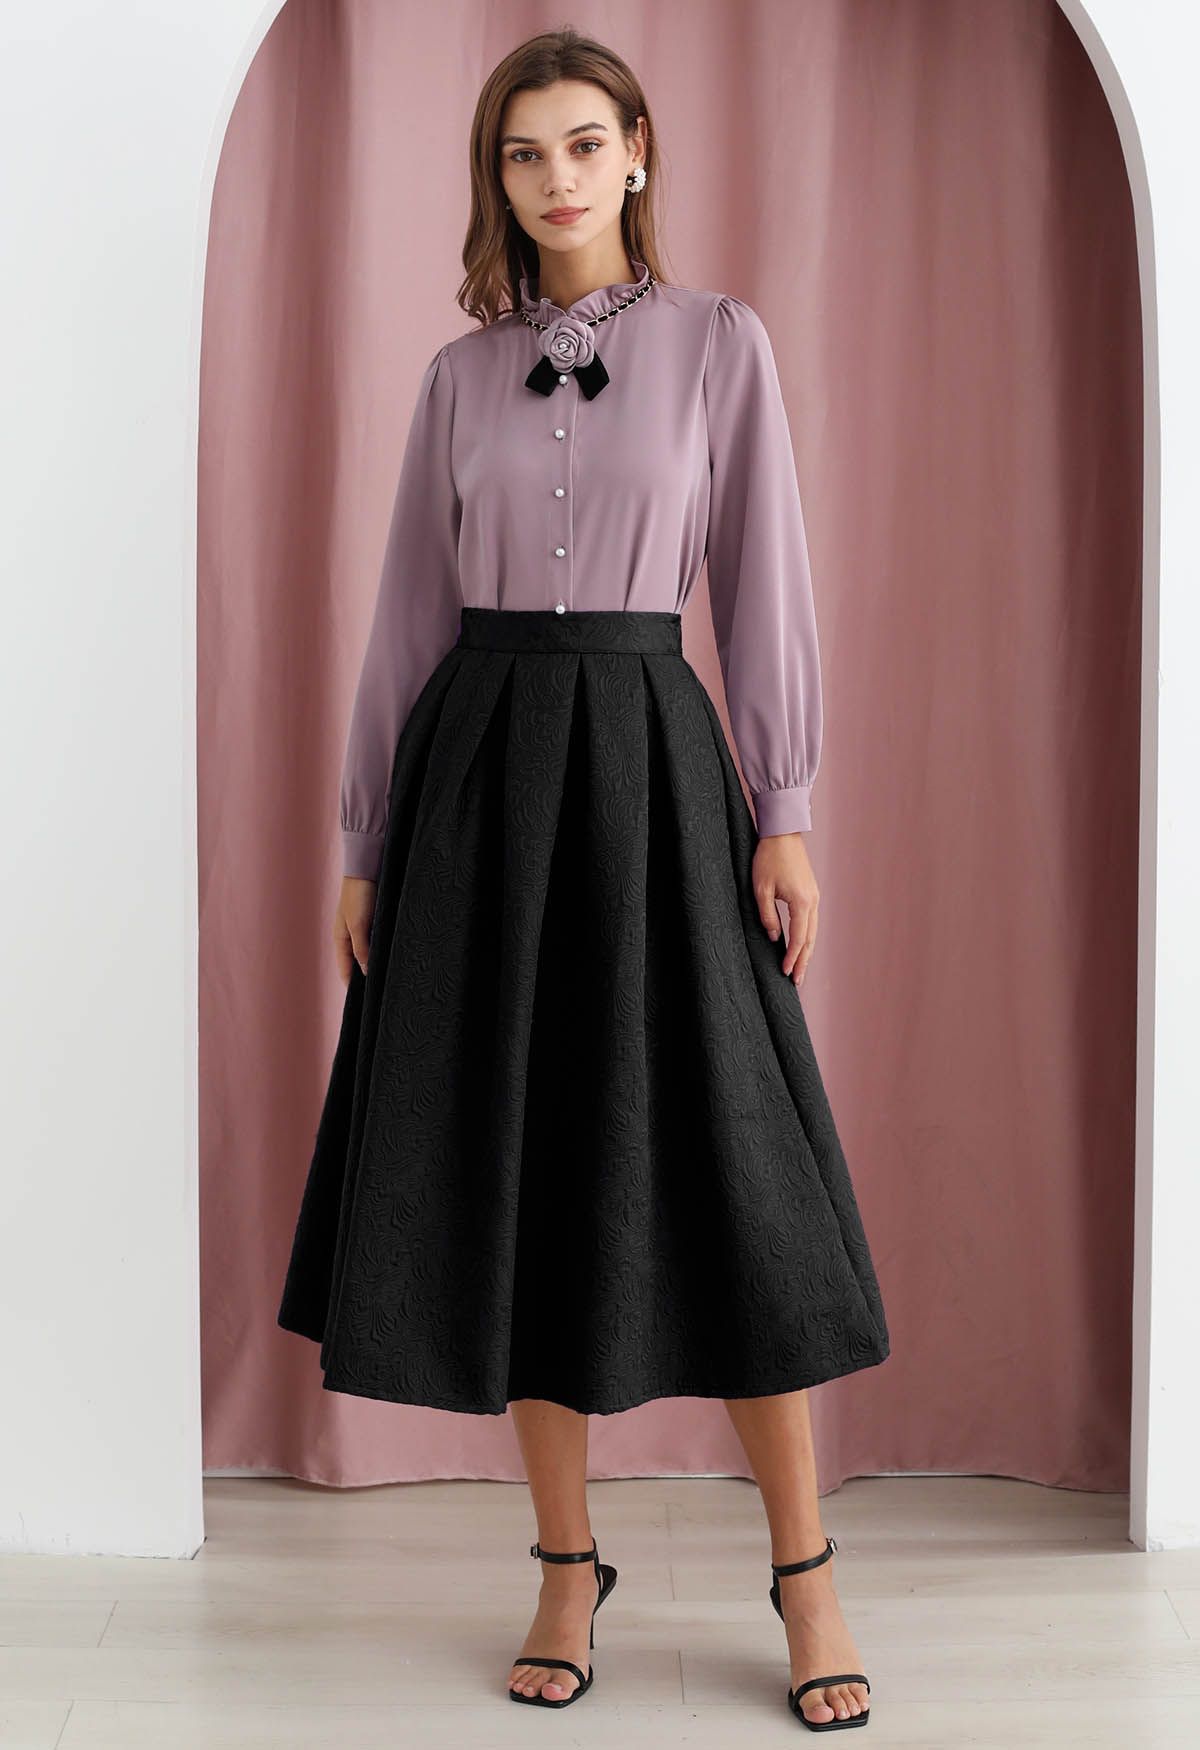 Noble Embossed Floral Jacquard Midi Skirt in Black